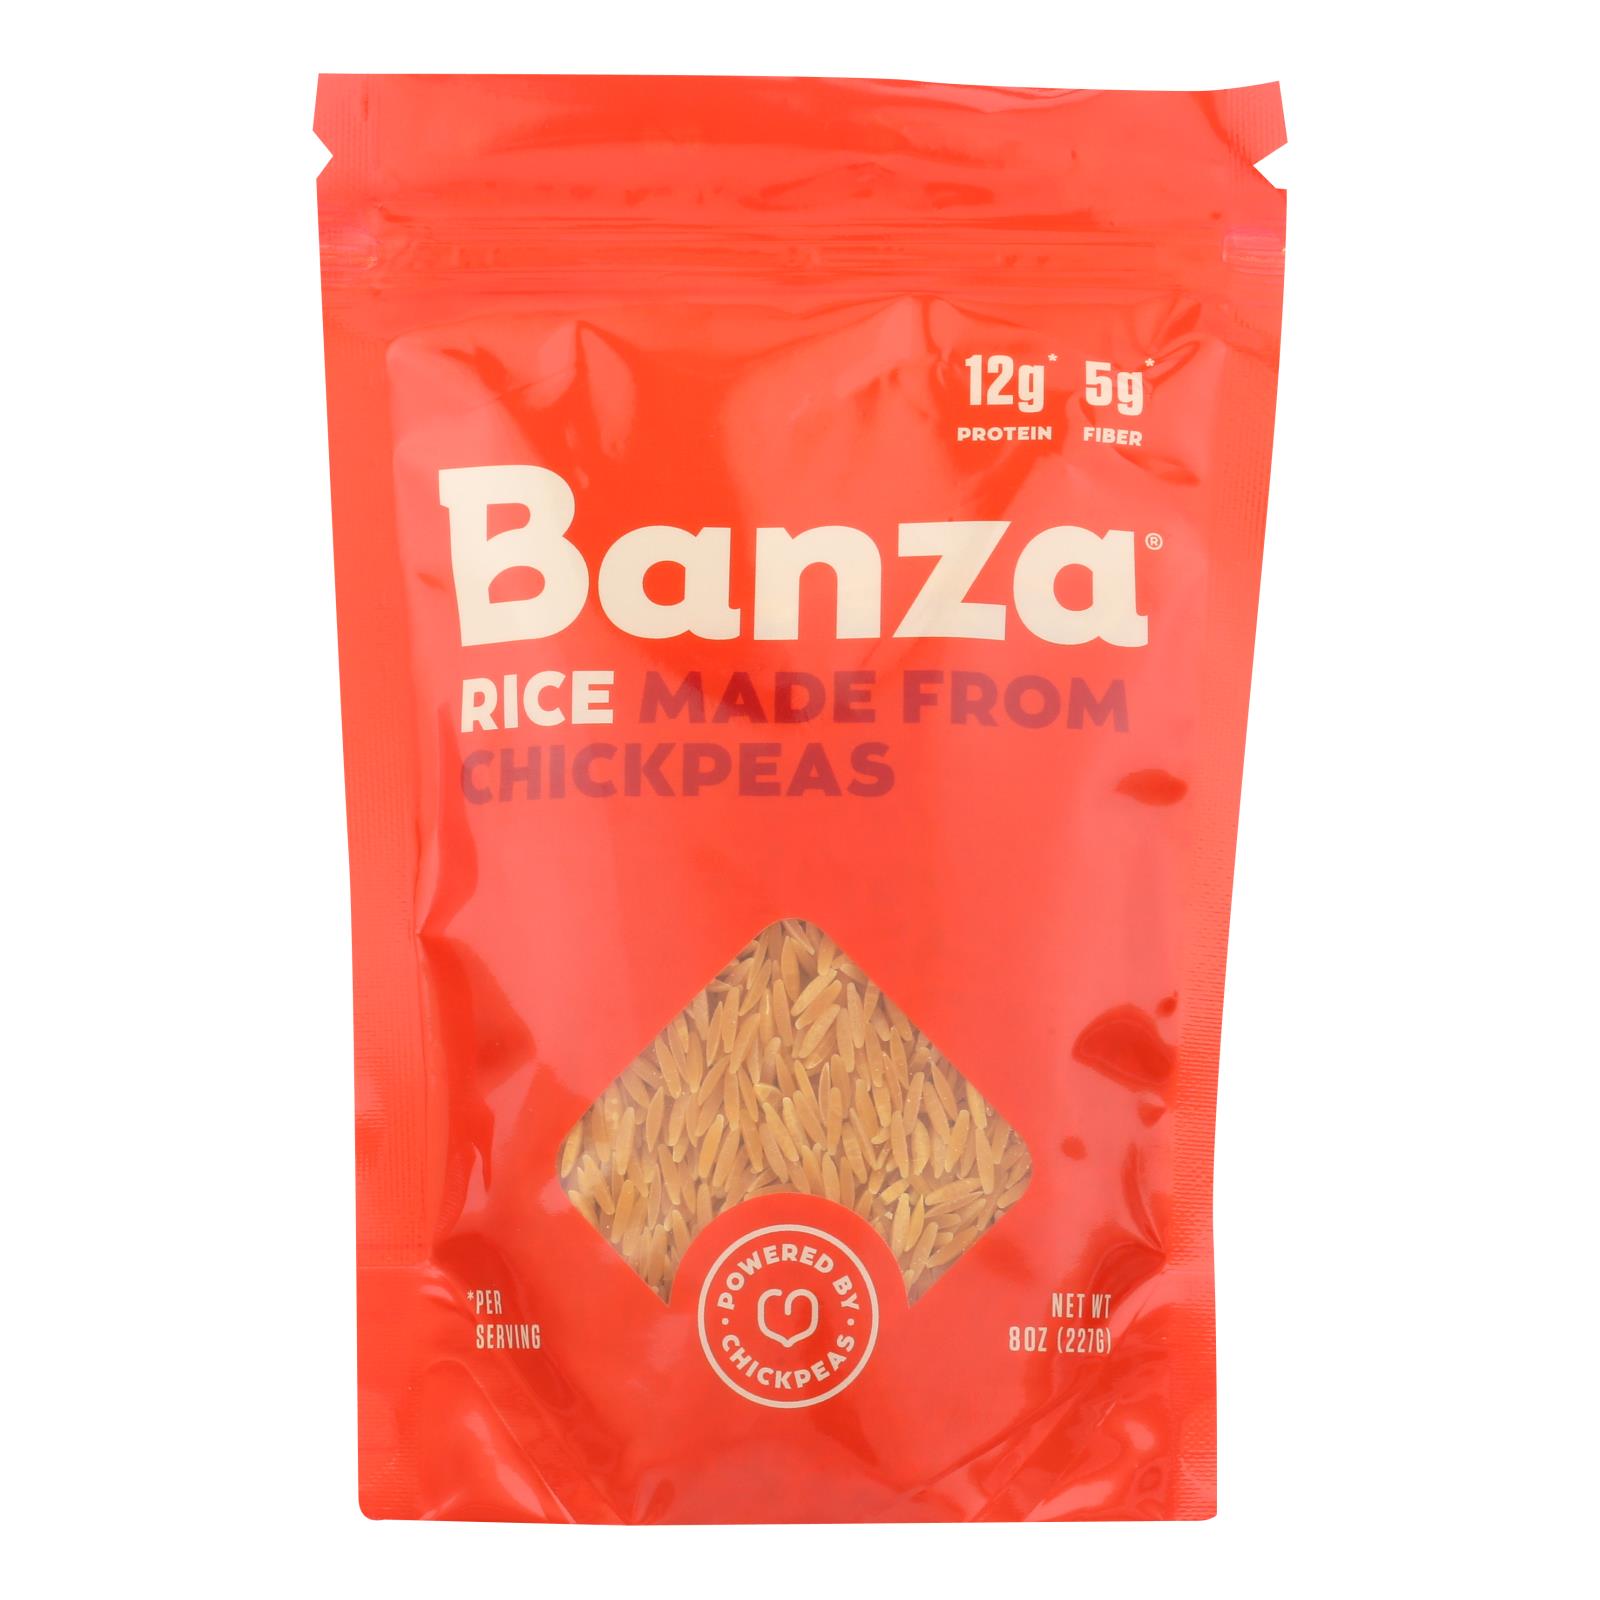 Banza - Rice Chickpea - 6개 묶음상품 - 8 OZ